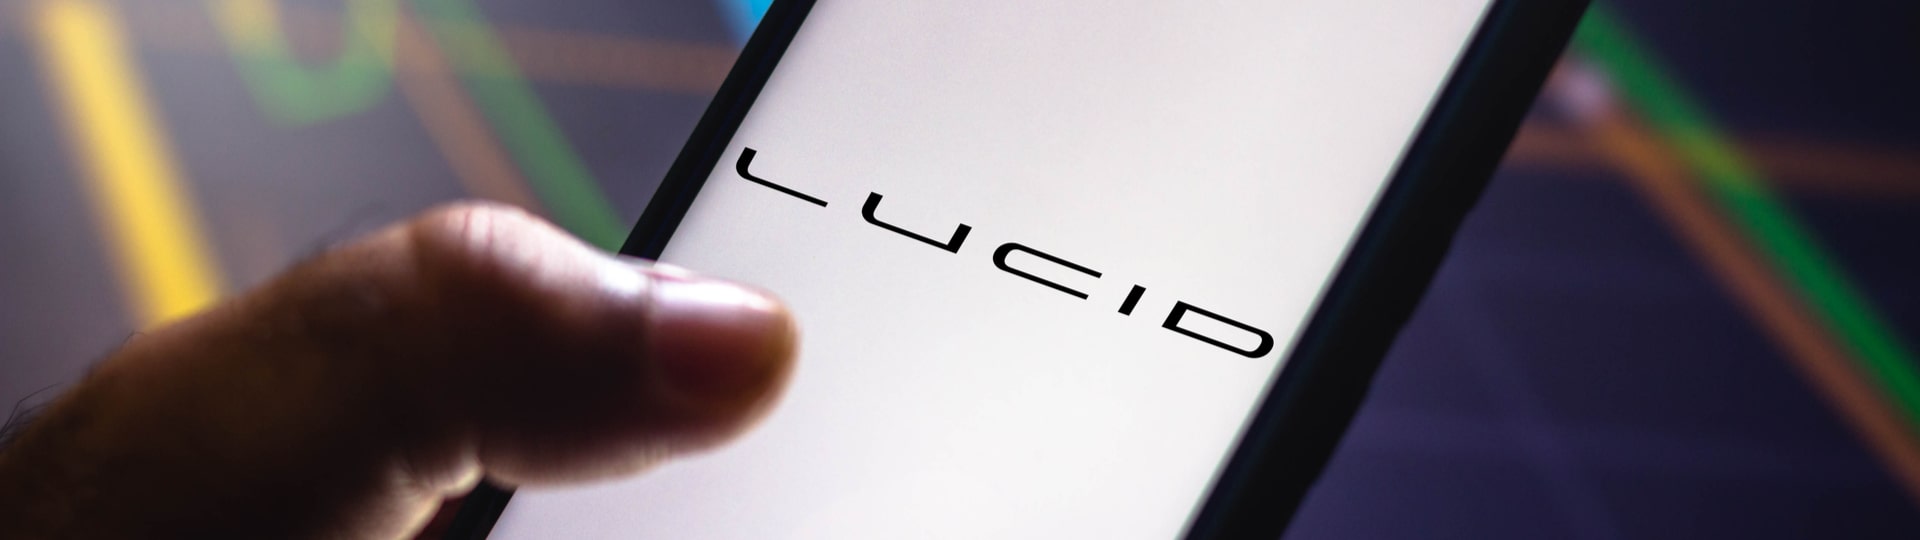 Americký výrobce elektromobilů Lucid hodlá letos zahájit prodej v Evropě